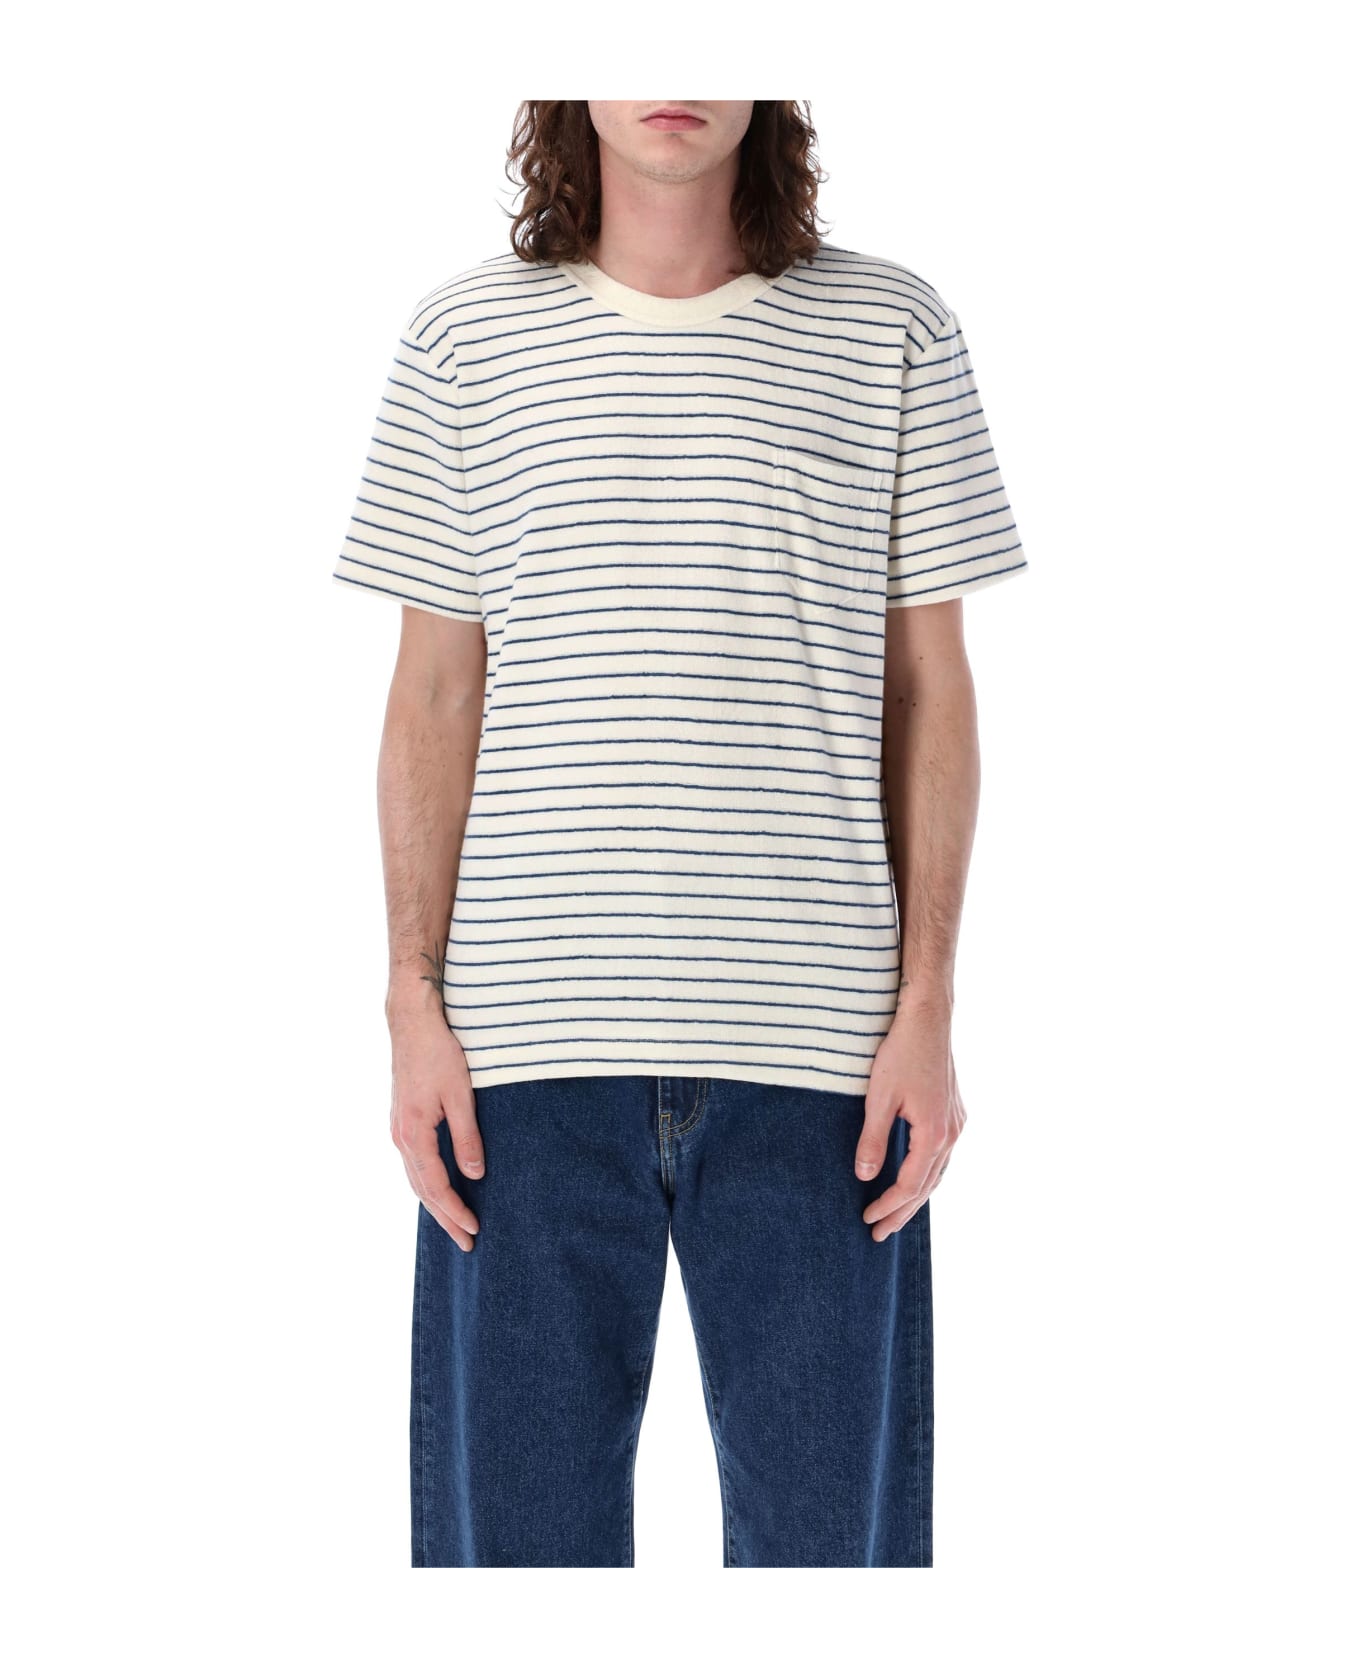 Howlin Striped T-shirt - BLU ISH